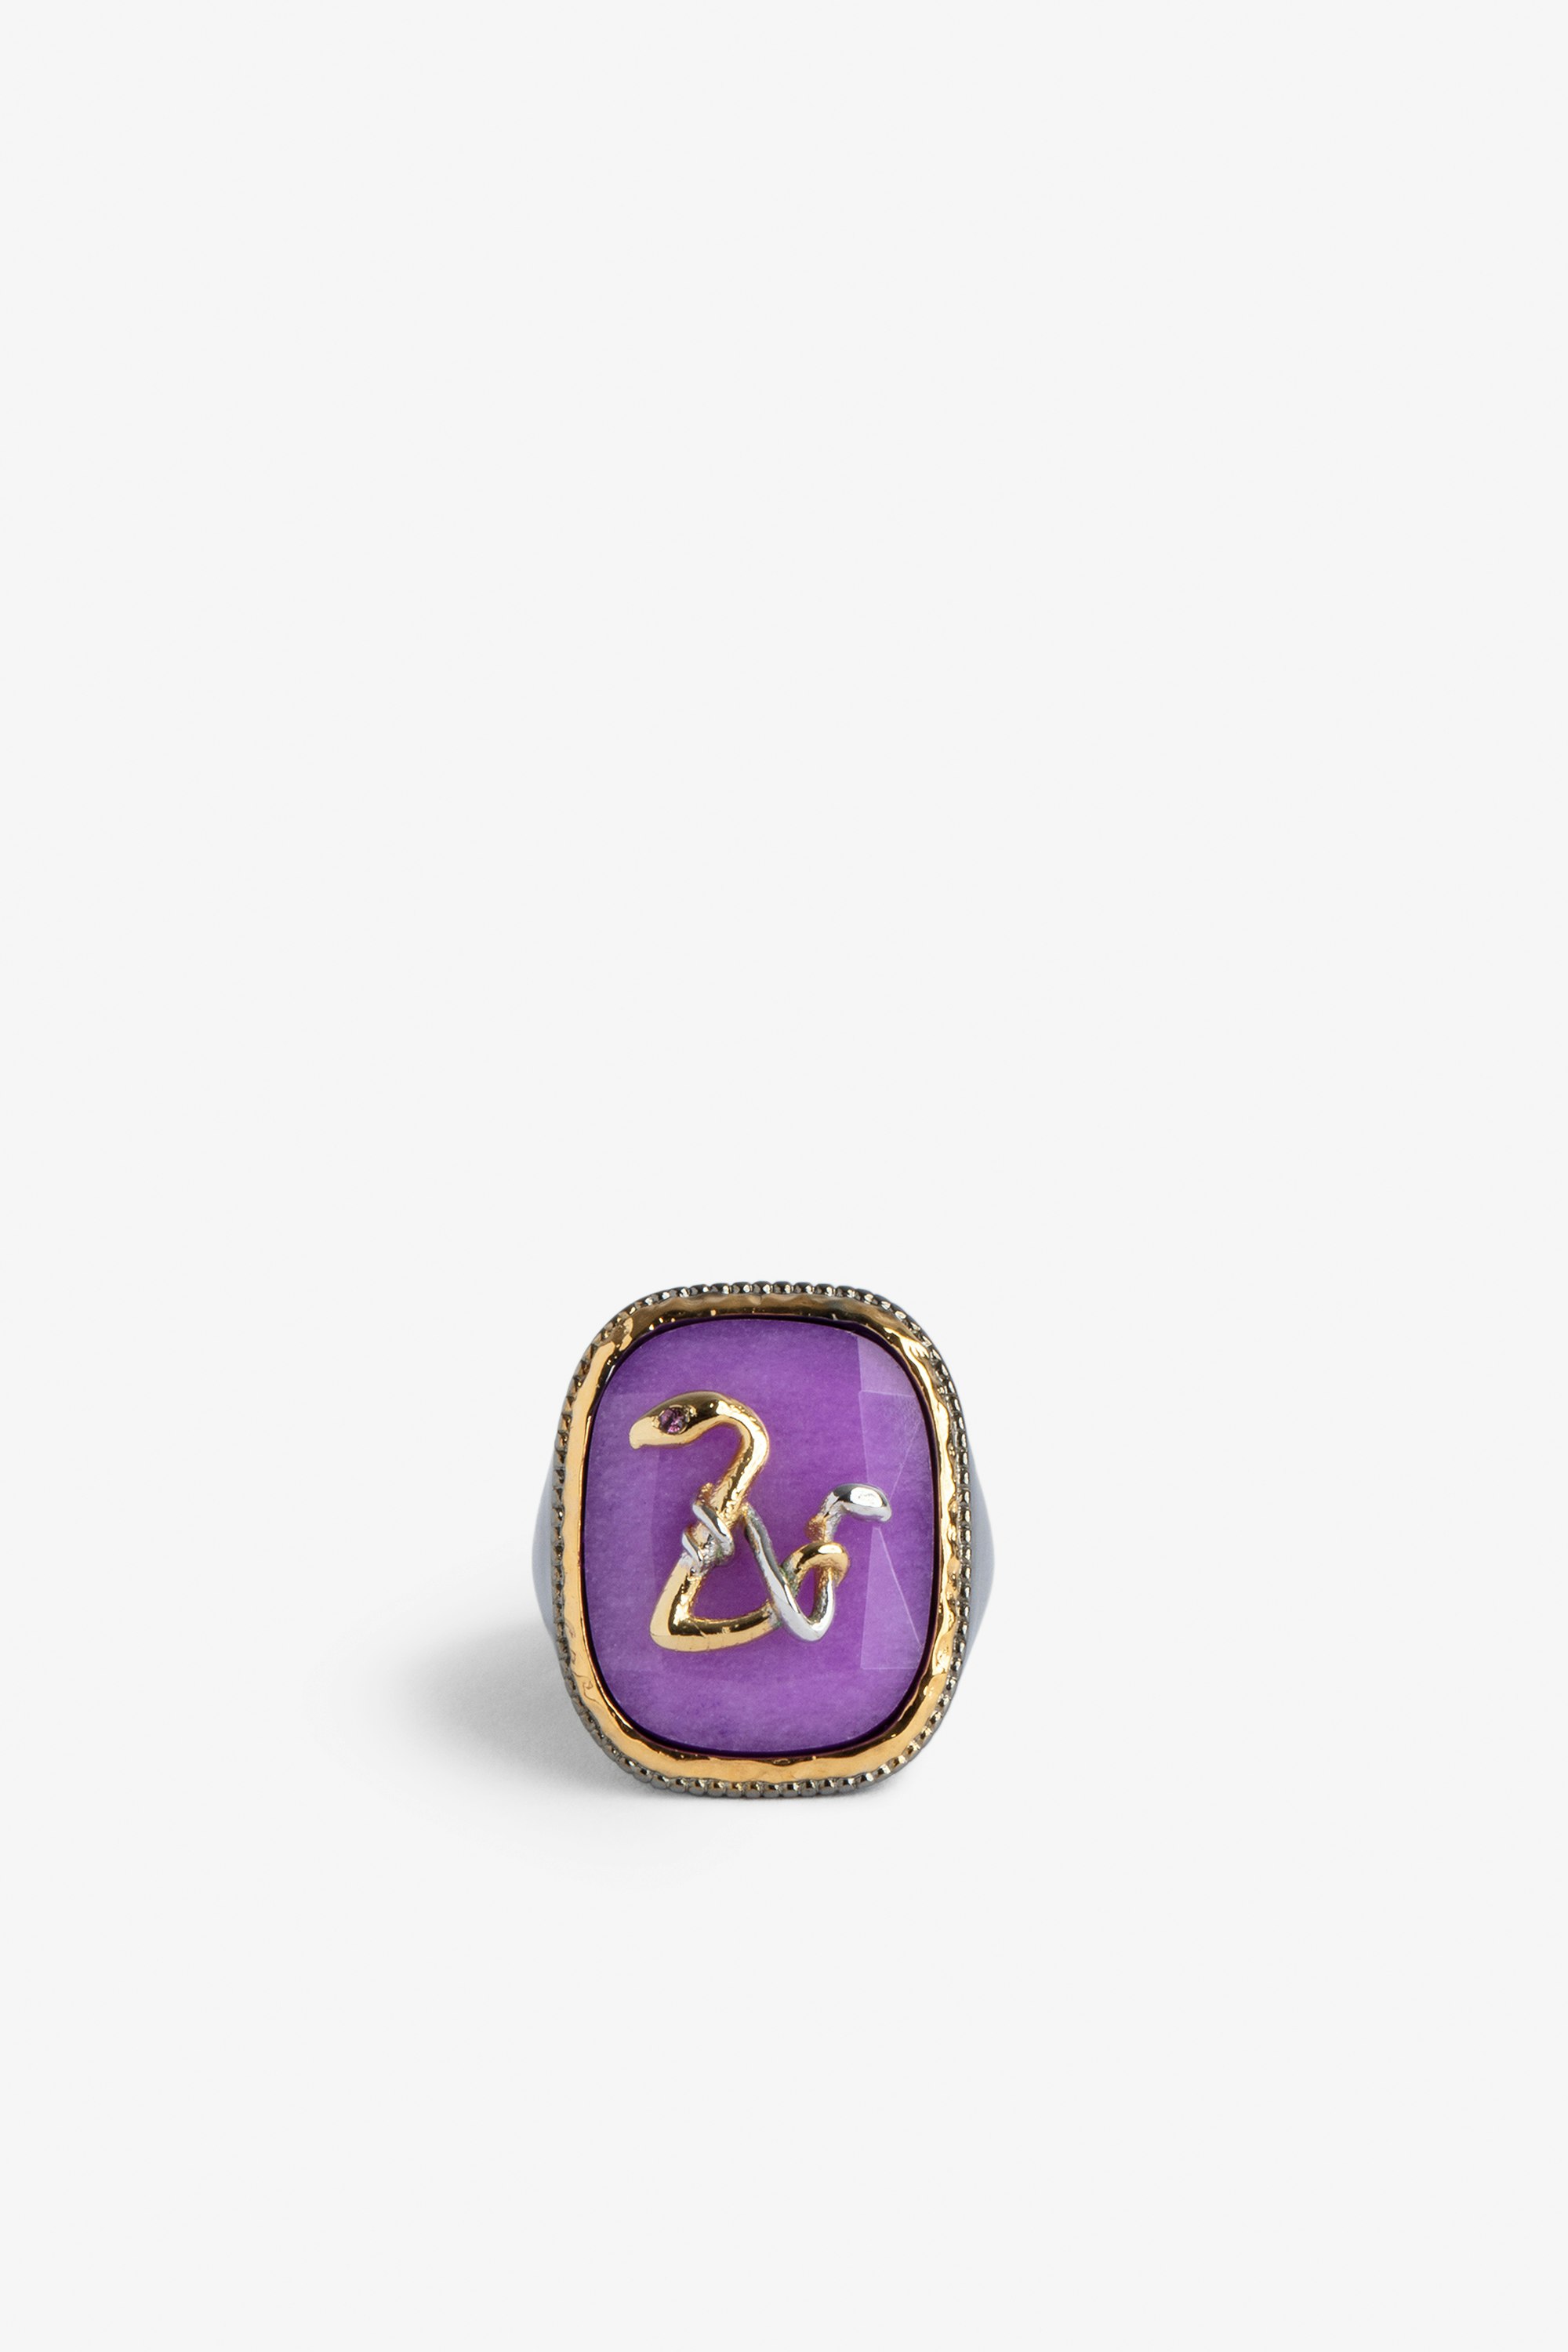 ZV Snake Signet Ring Women's purple signet ring set with ZV snakes in gold-tone brass